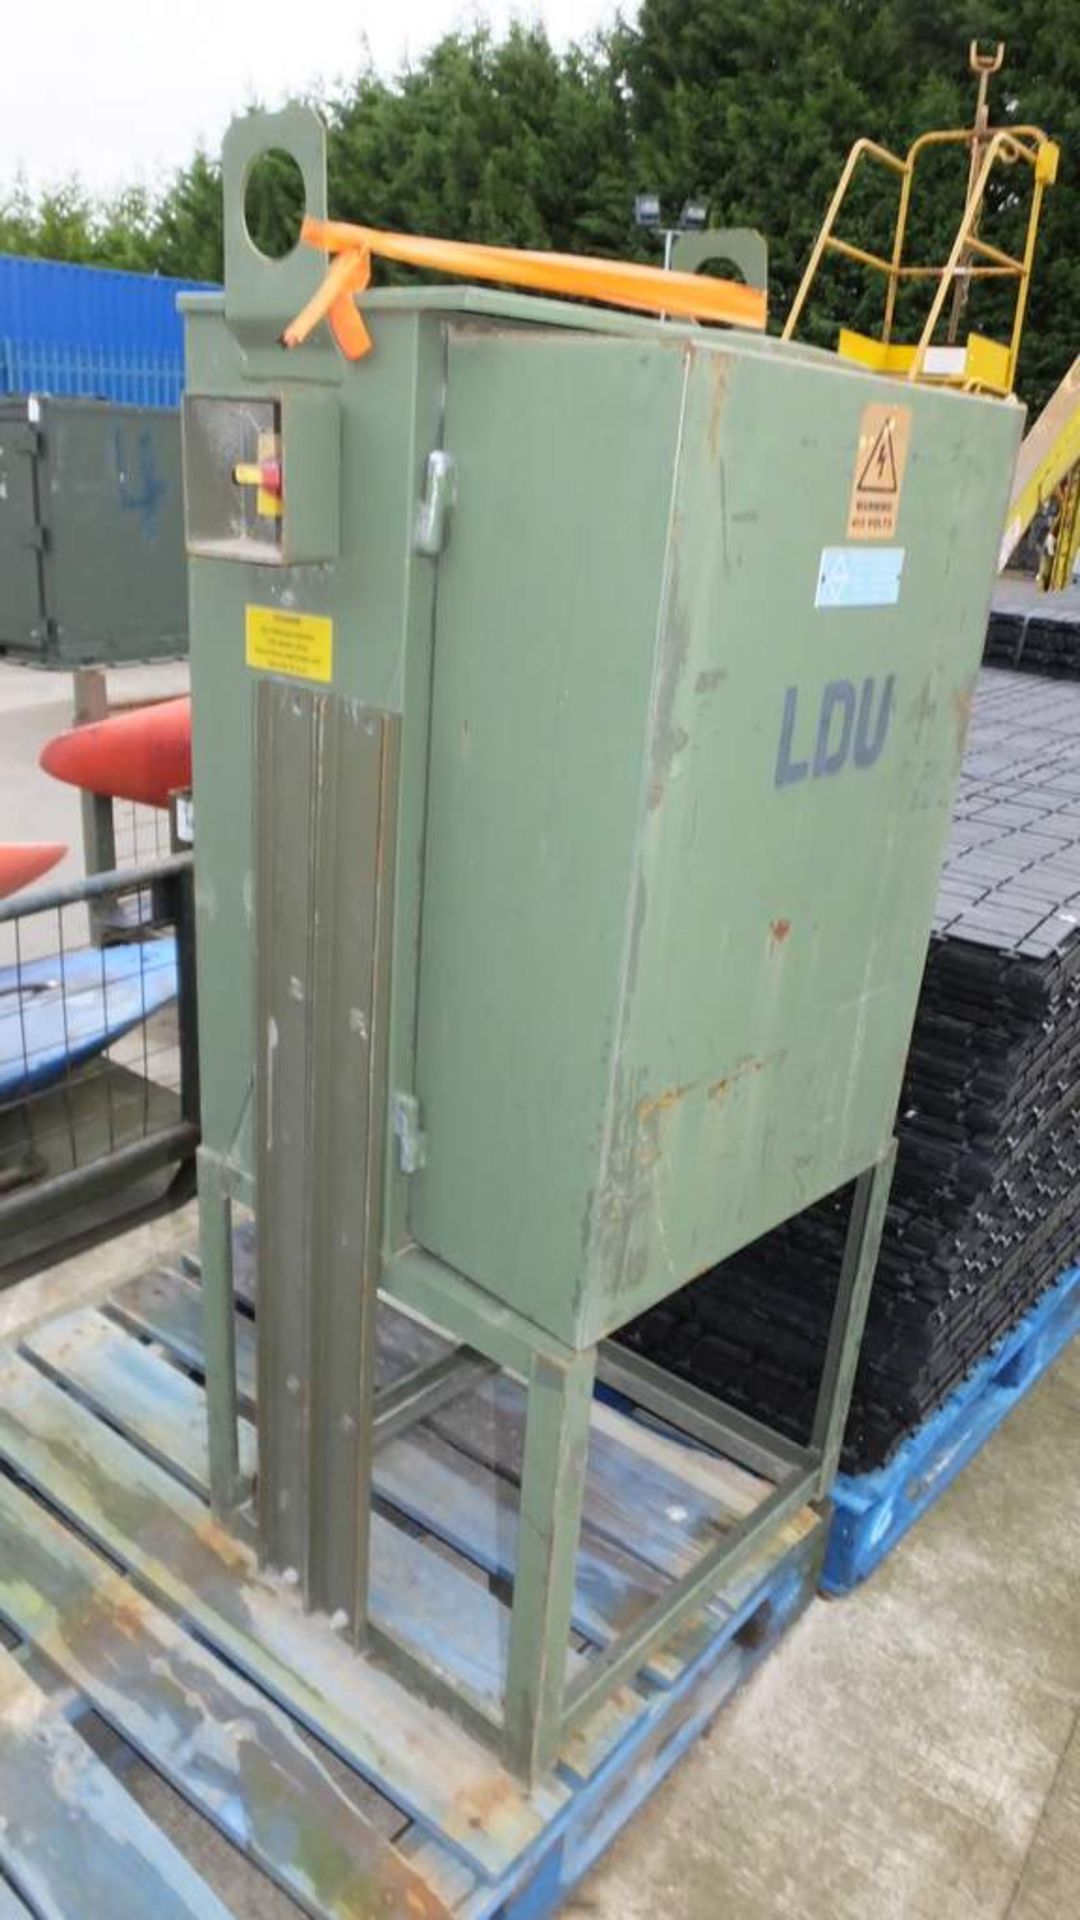 Lewden LDU 400v distribution box - Image 2 of 2